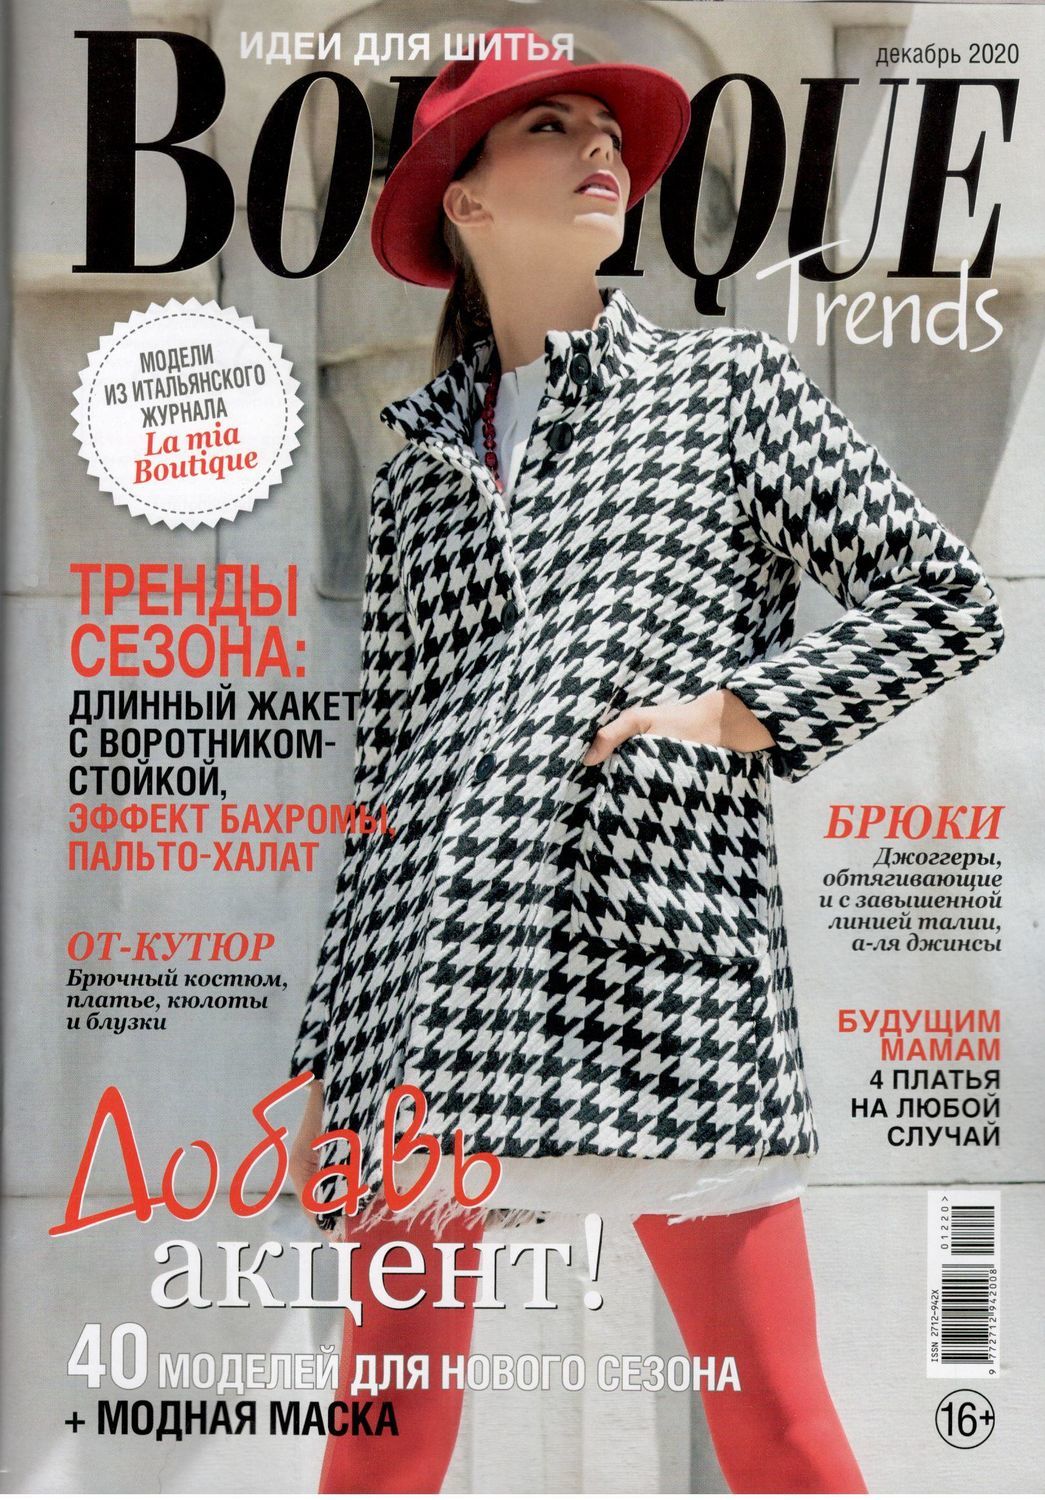 Trend boutique. Журнал итальянской моды Boutique выкройки. Журнал Boutique trends. Журнал бутик. Boutique журнал мод.